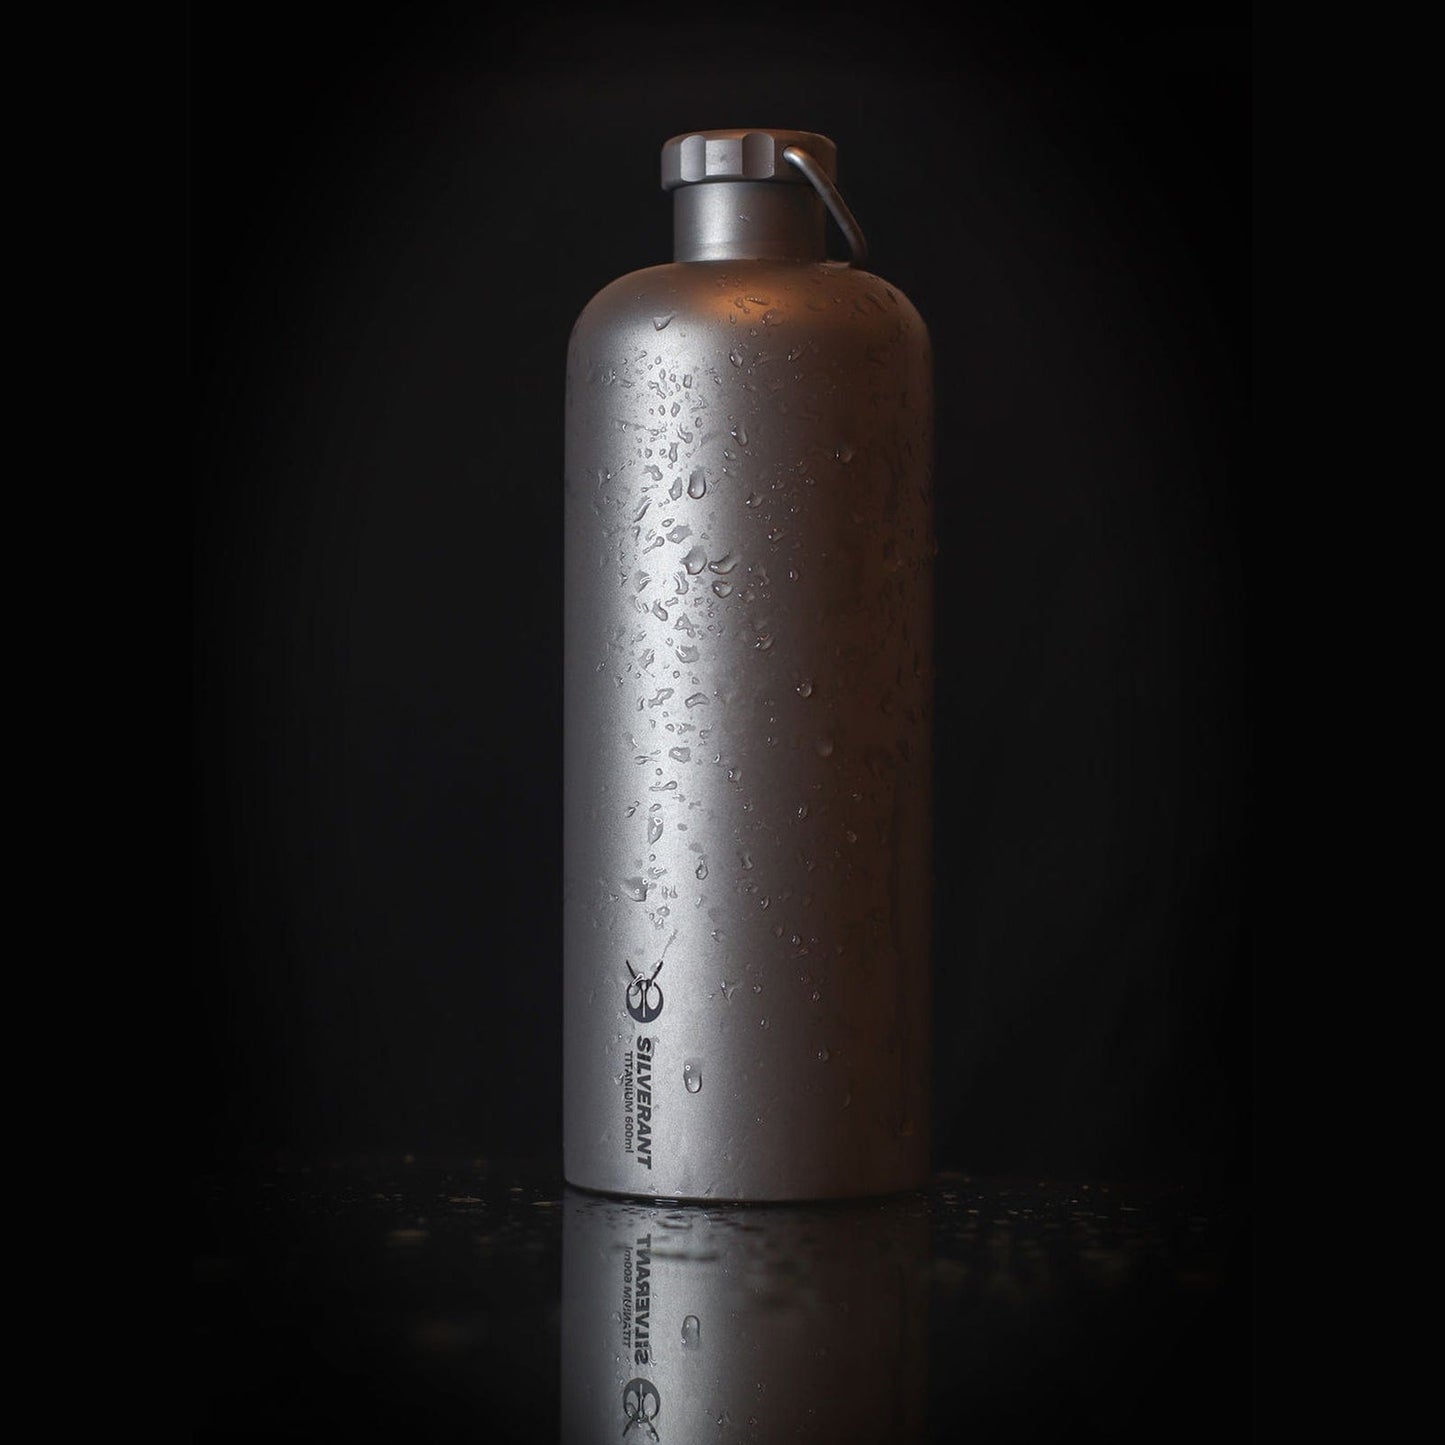 
                  
                    Ultralight Titanium Water Bottle 600ml/21.1 fl - SilverAnt Outdoors
                  
                